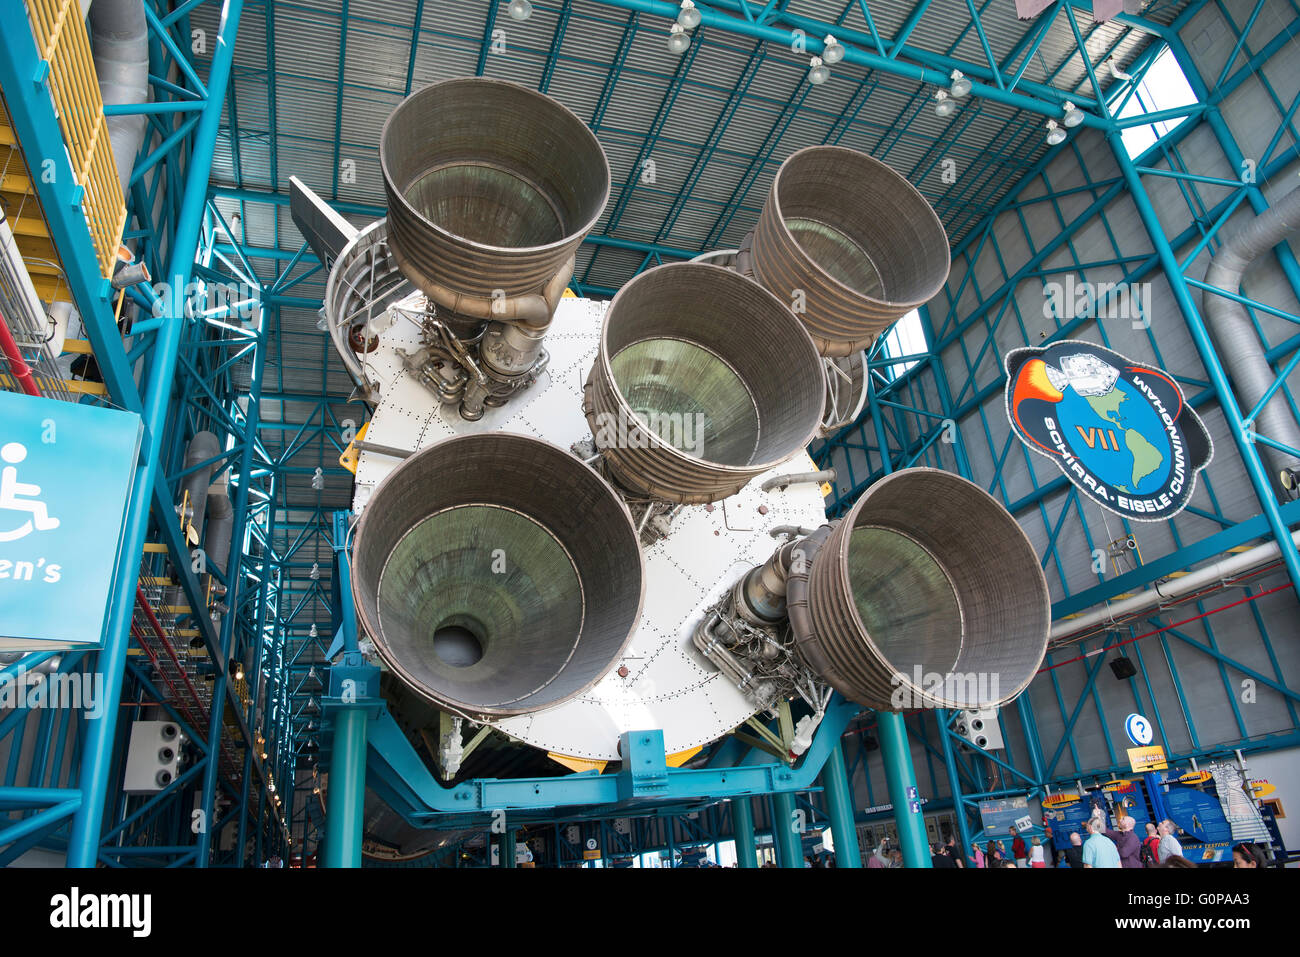 Saturn V rocket from the Apollo moon program, Saturn V complex, Kennedy Space Center, Merritt Island, Florida, USA Stock Photo